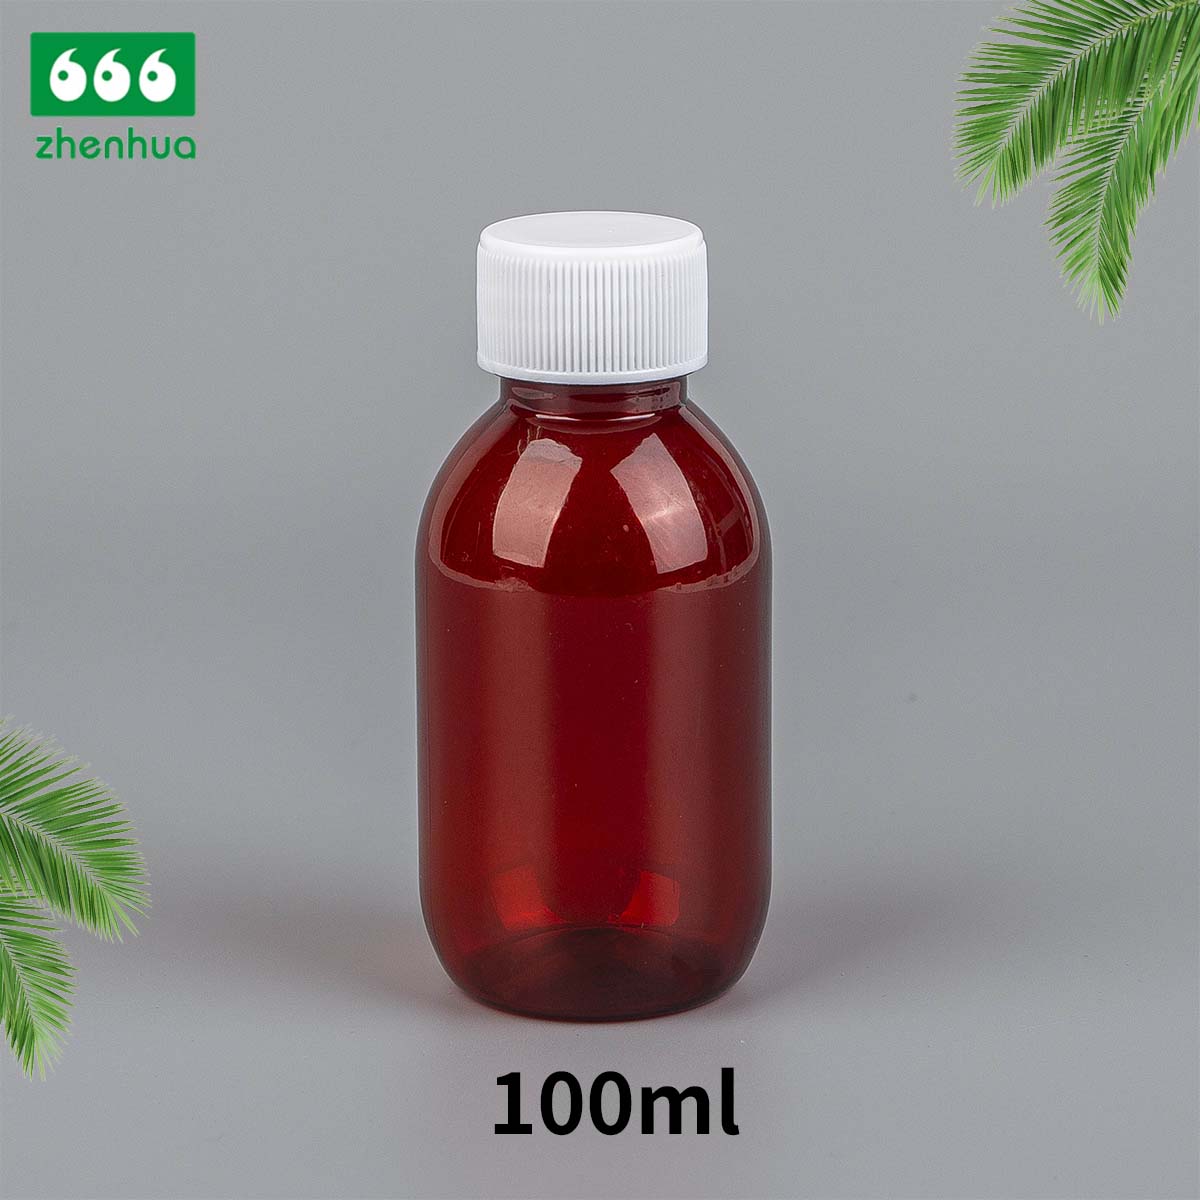 100ml Round Amber PET Liquid Medicinal Syrup Bottle/ Enzyme Drink Bottle with Tamper Evident Cap